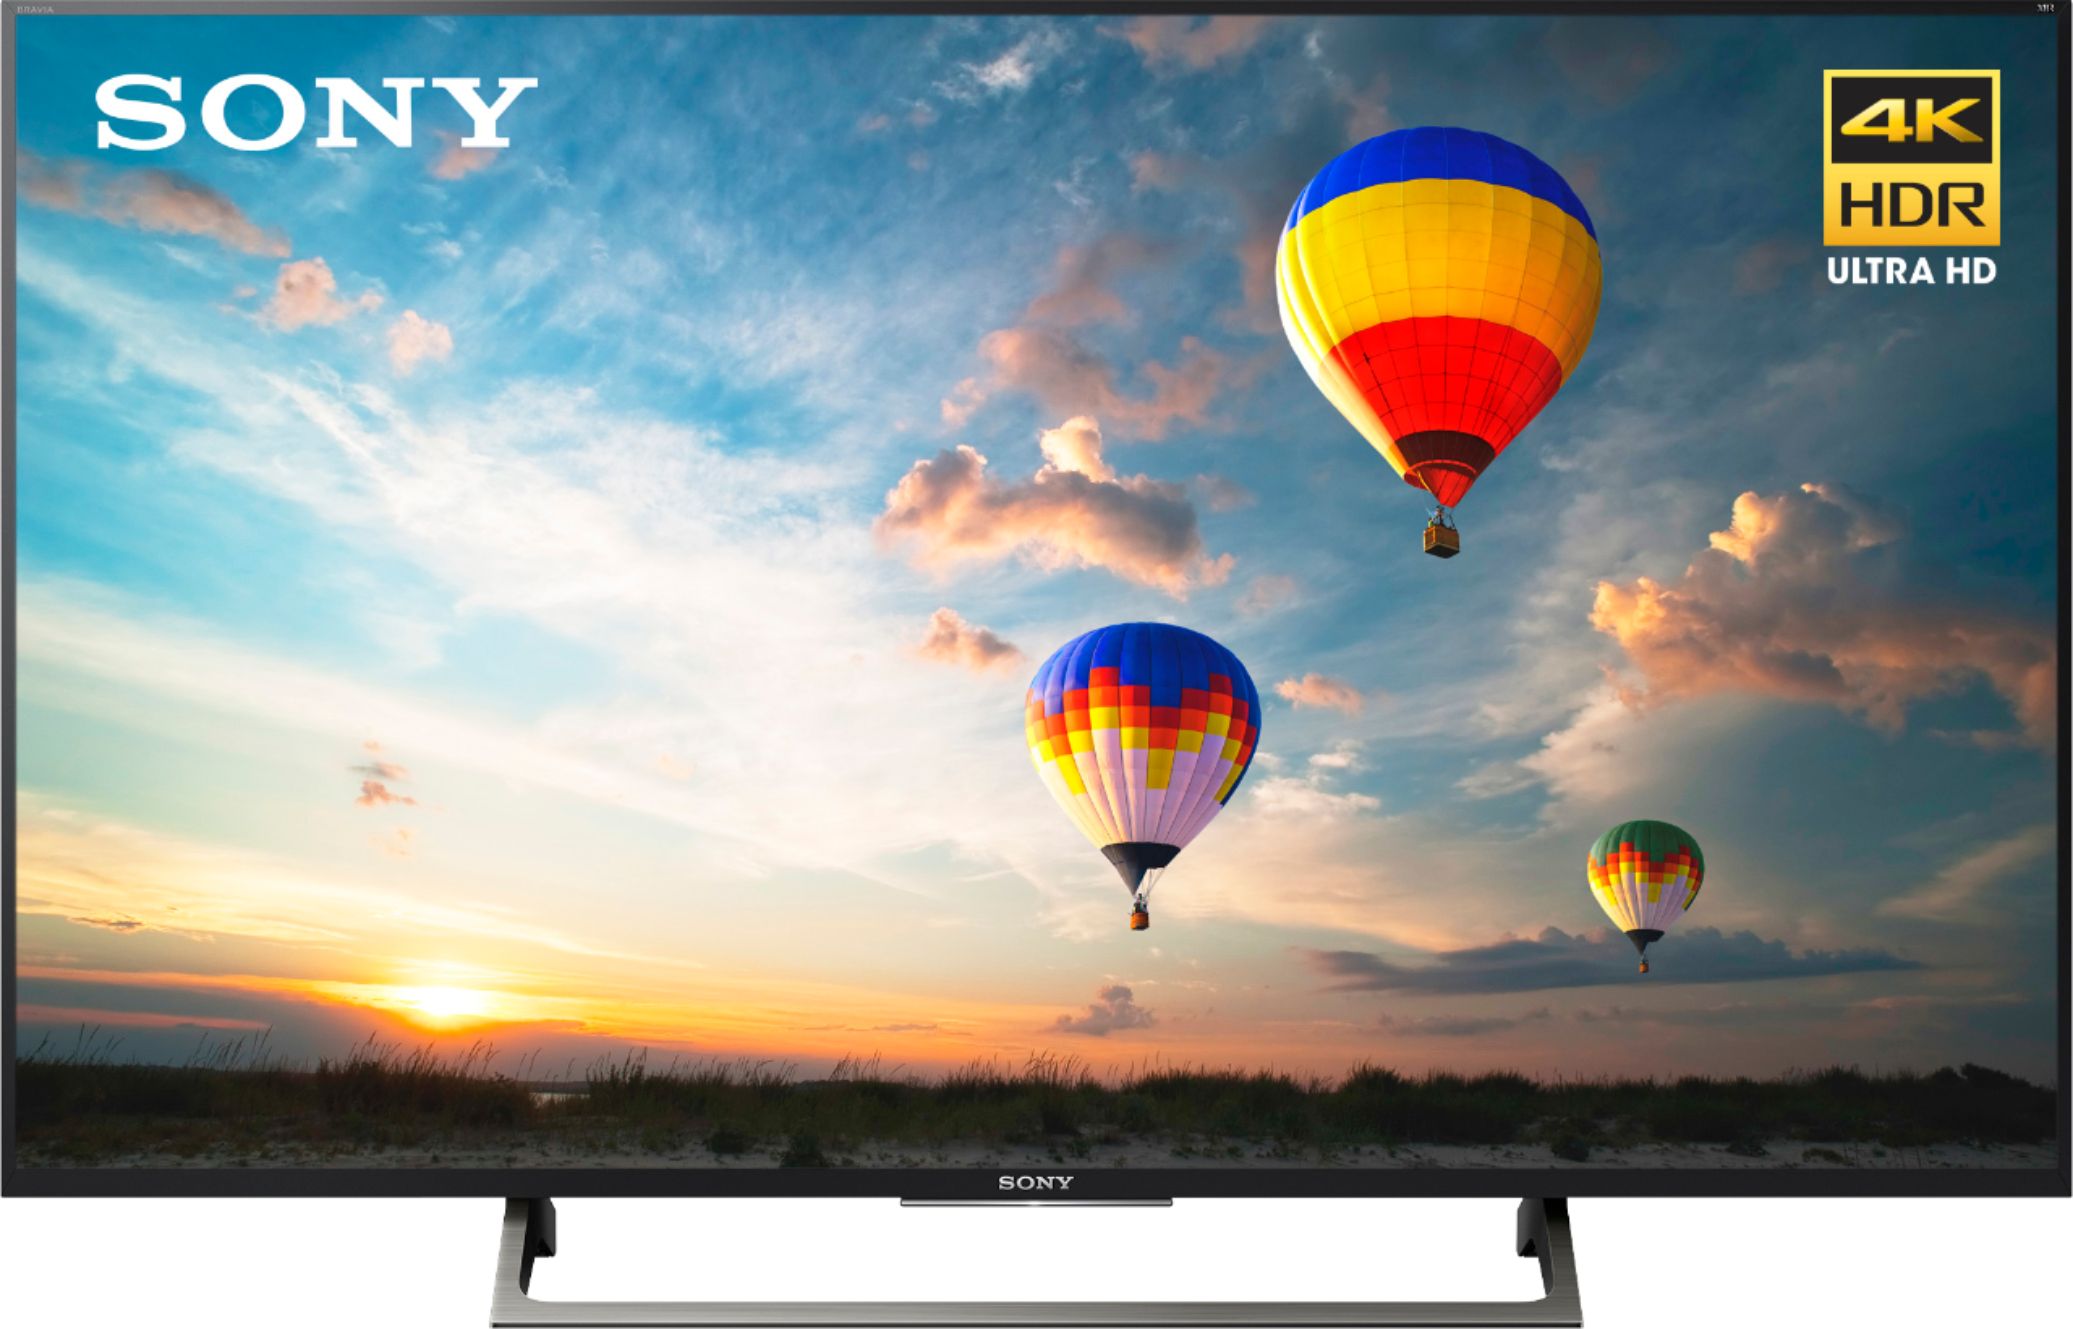 Sony 55" Class LED X800E Series 2160p UHD TV HDR XBR55X800E - Best Buy